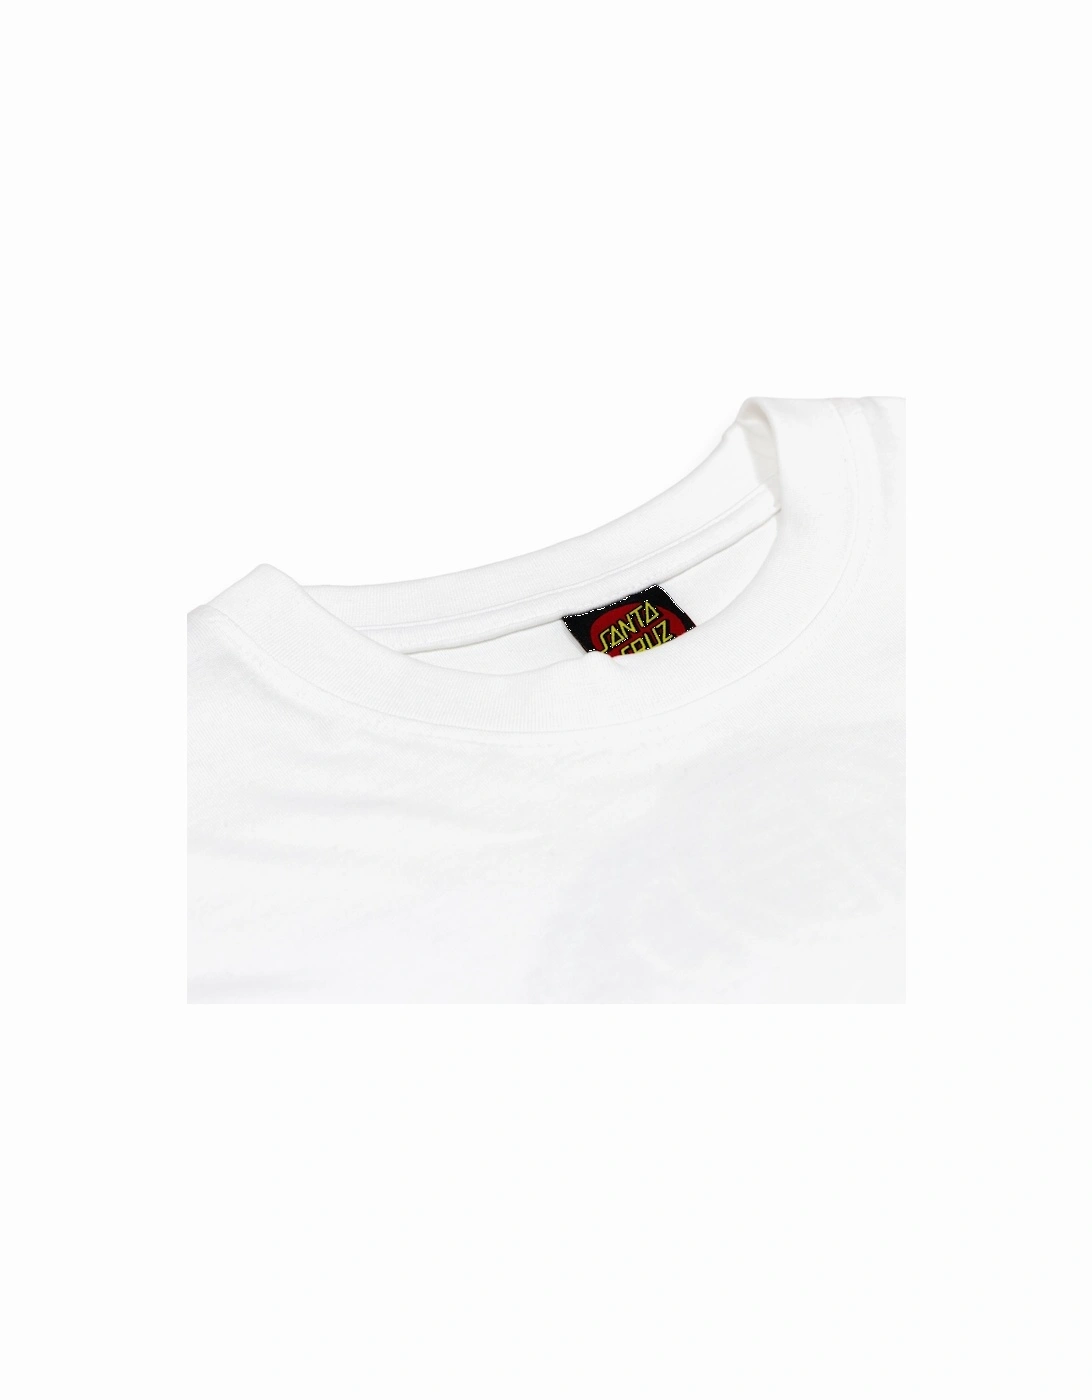 Dressen Rose Crew One T-Shirt - White